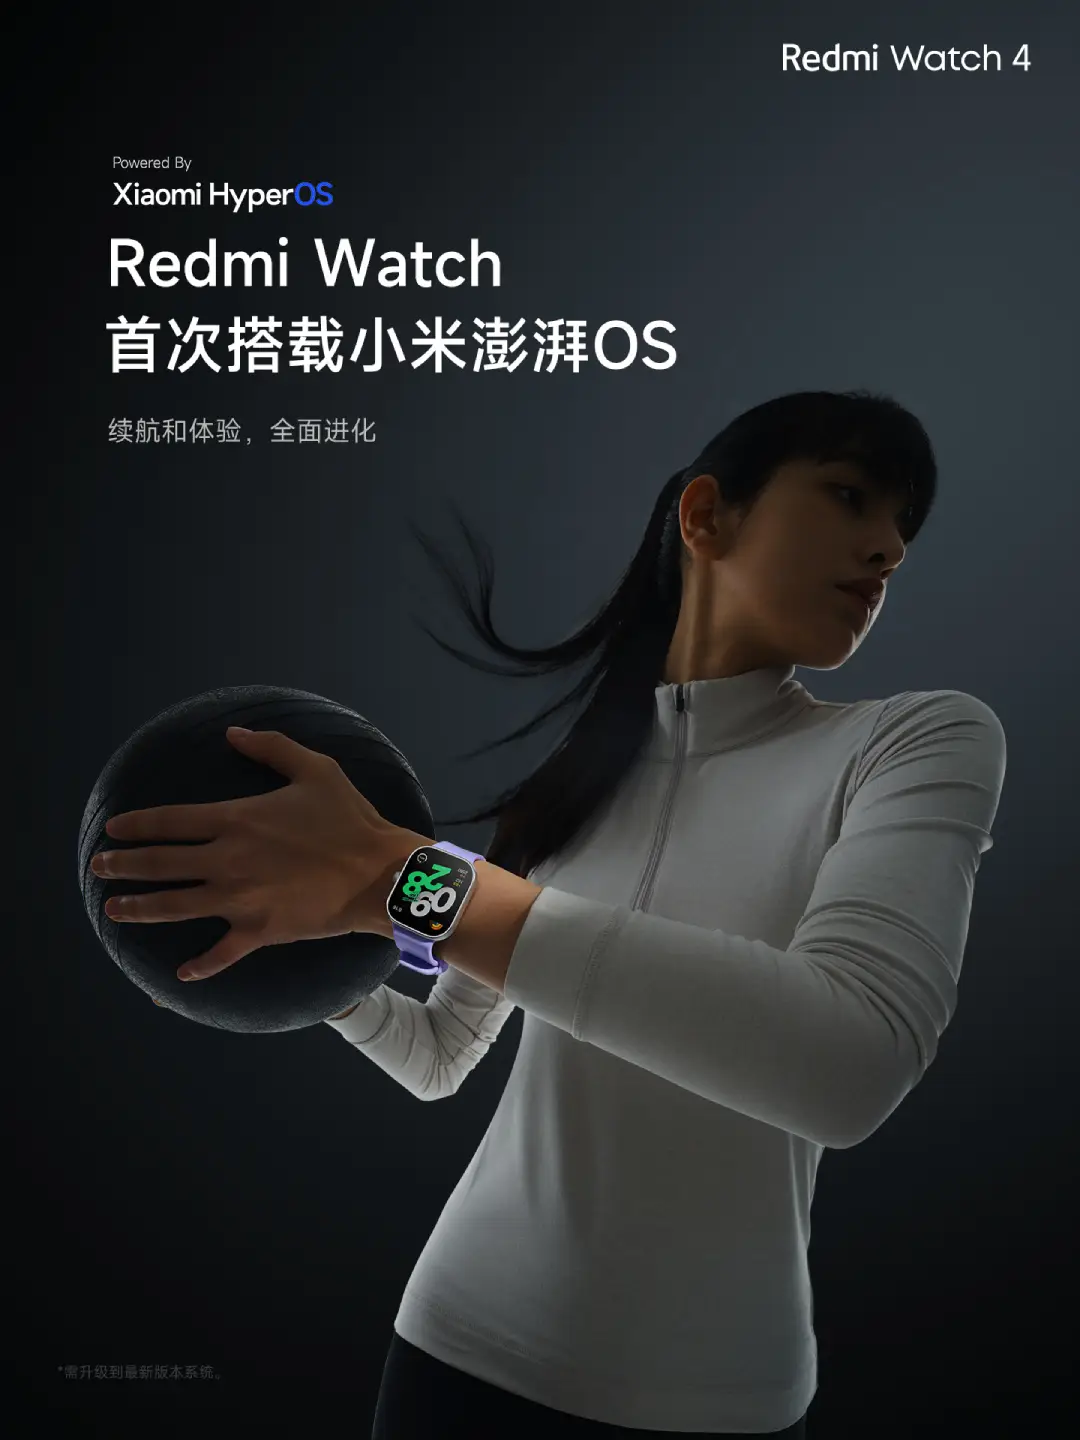 Redmi Watch 4: HyperOS on board